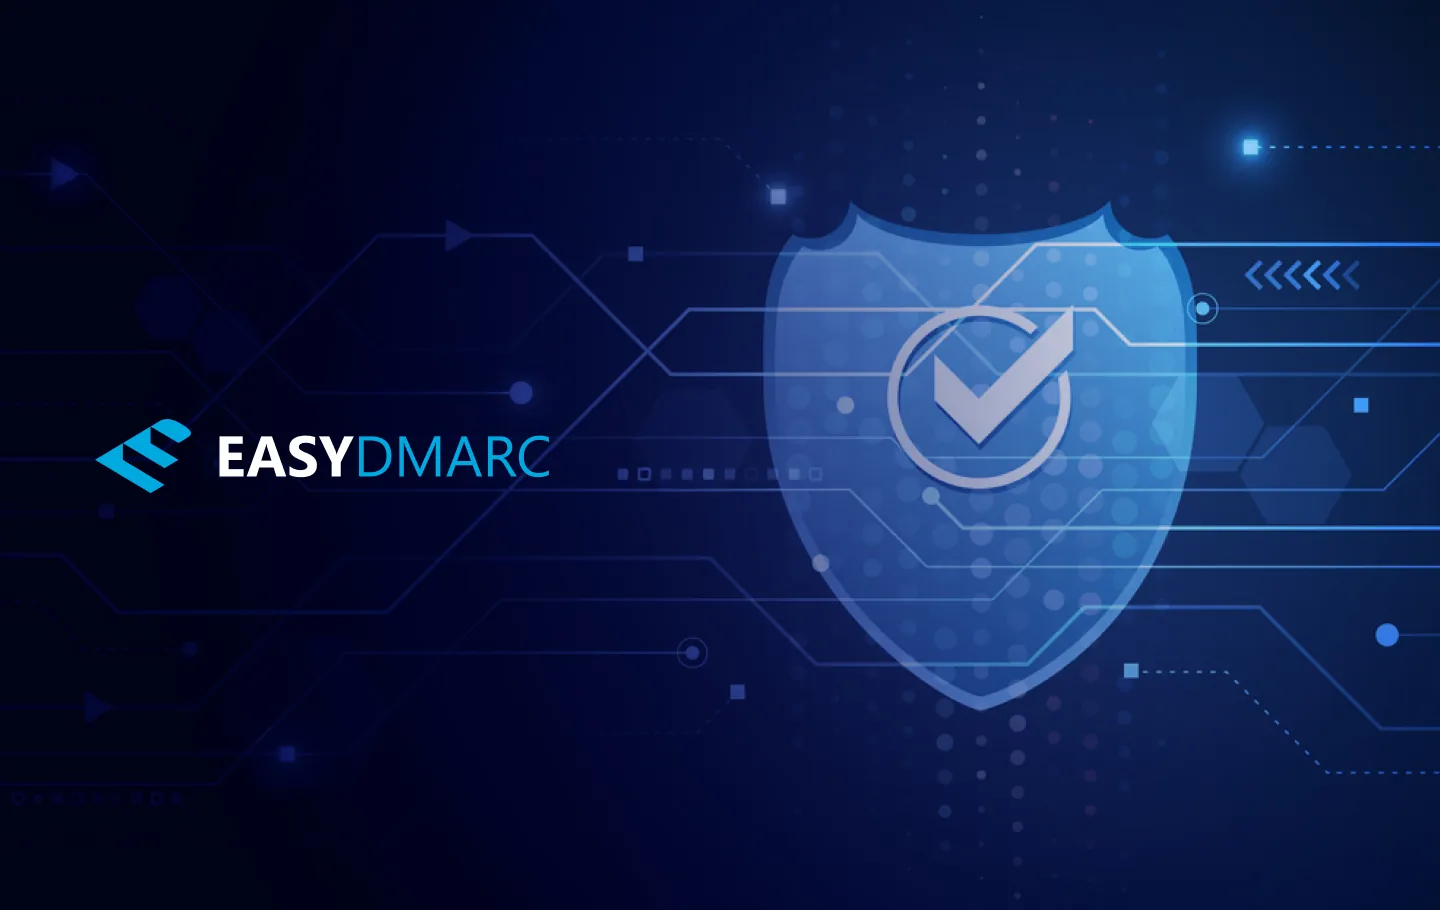 EasyDMARC logo on a dark-blue background